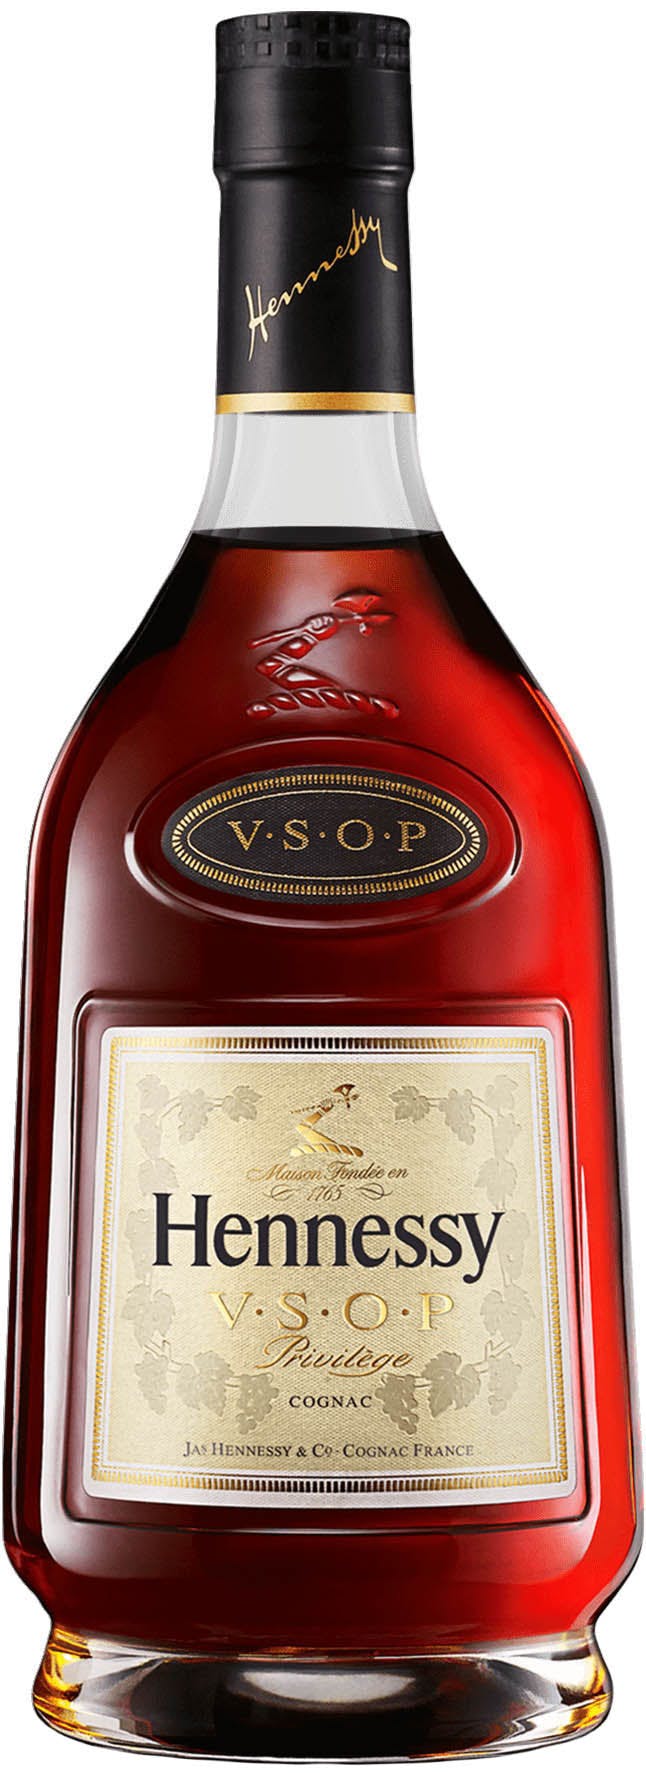 Cognac Brand Champion 2018: Hennessy - The Spirits Business